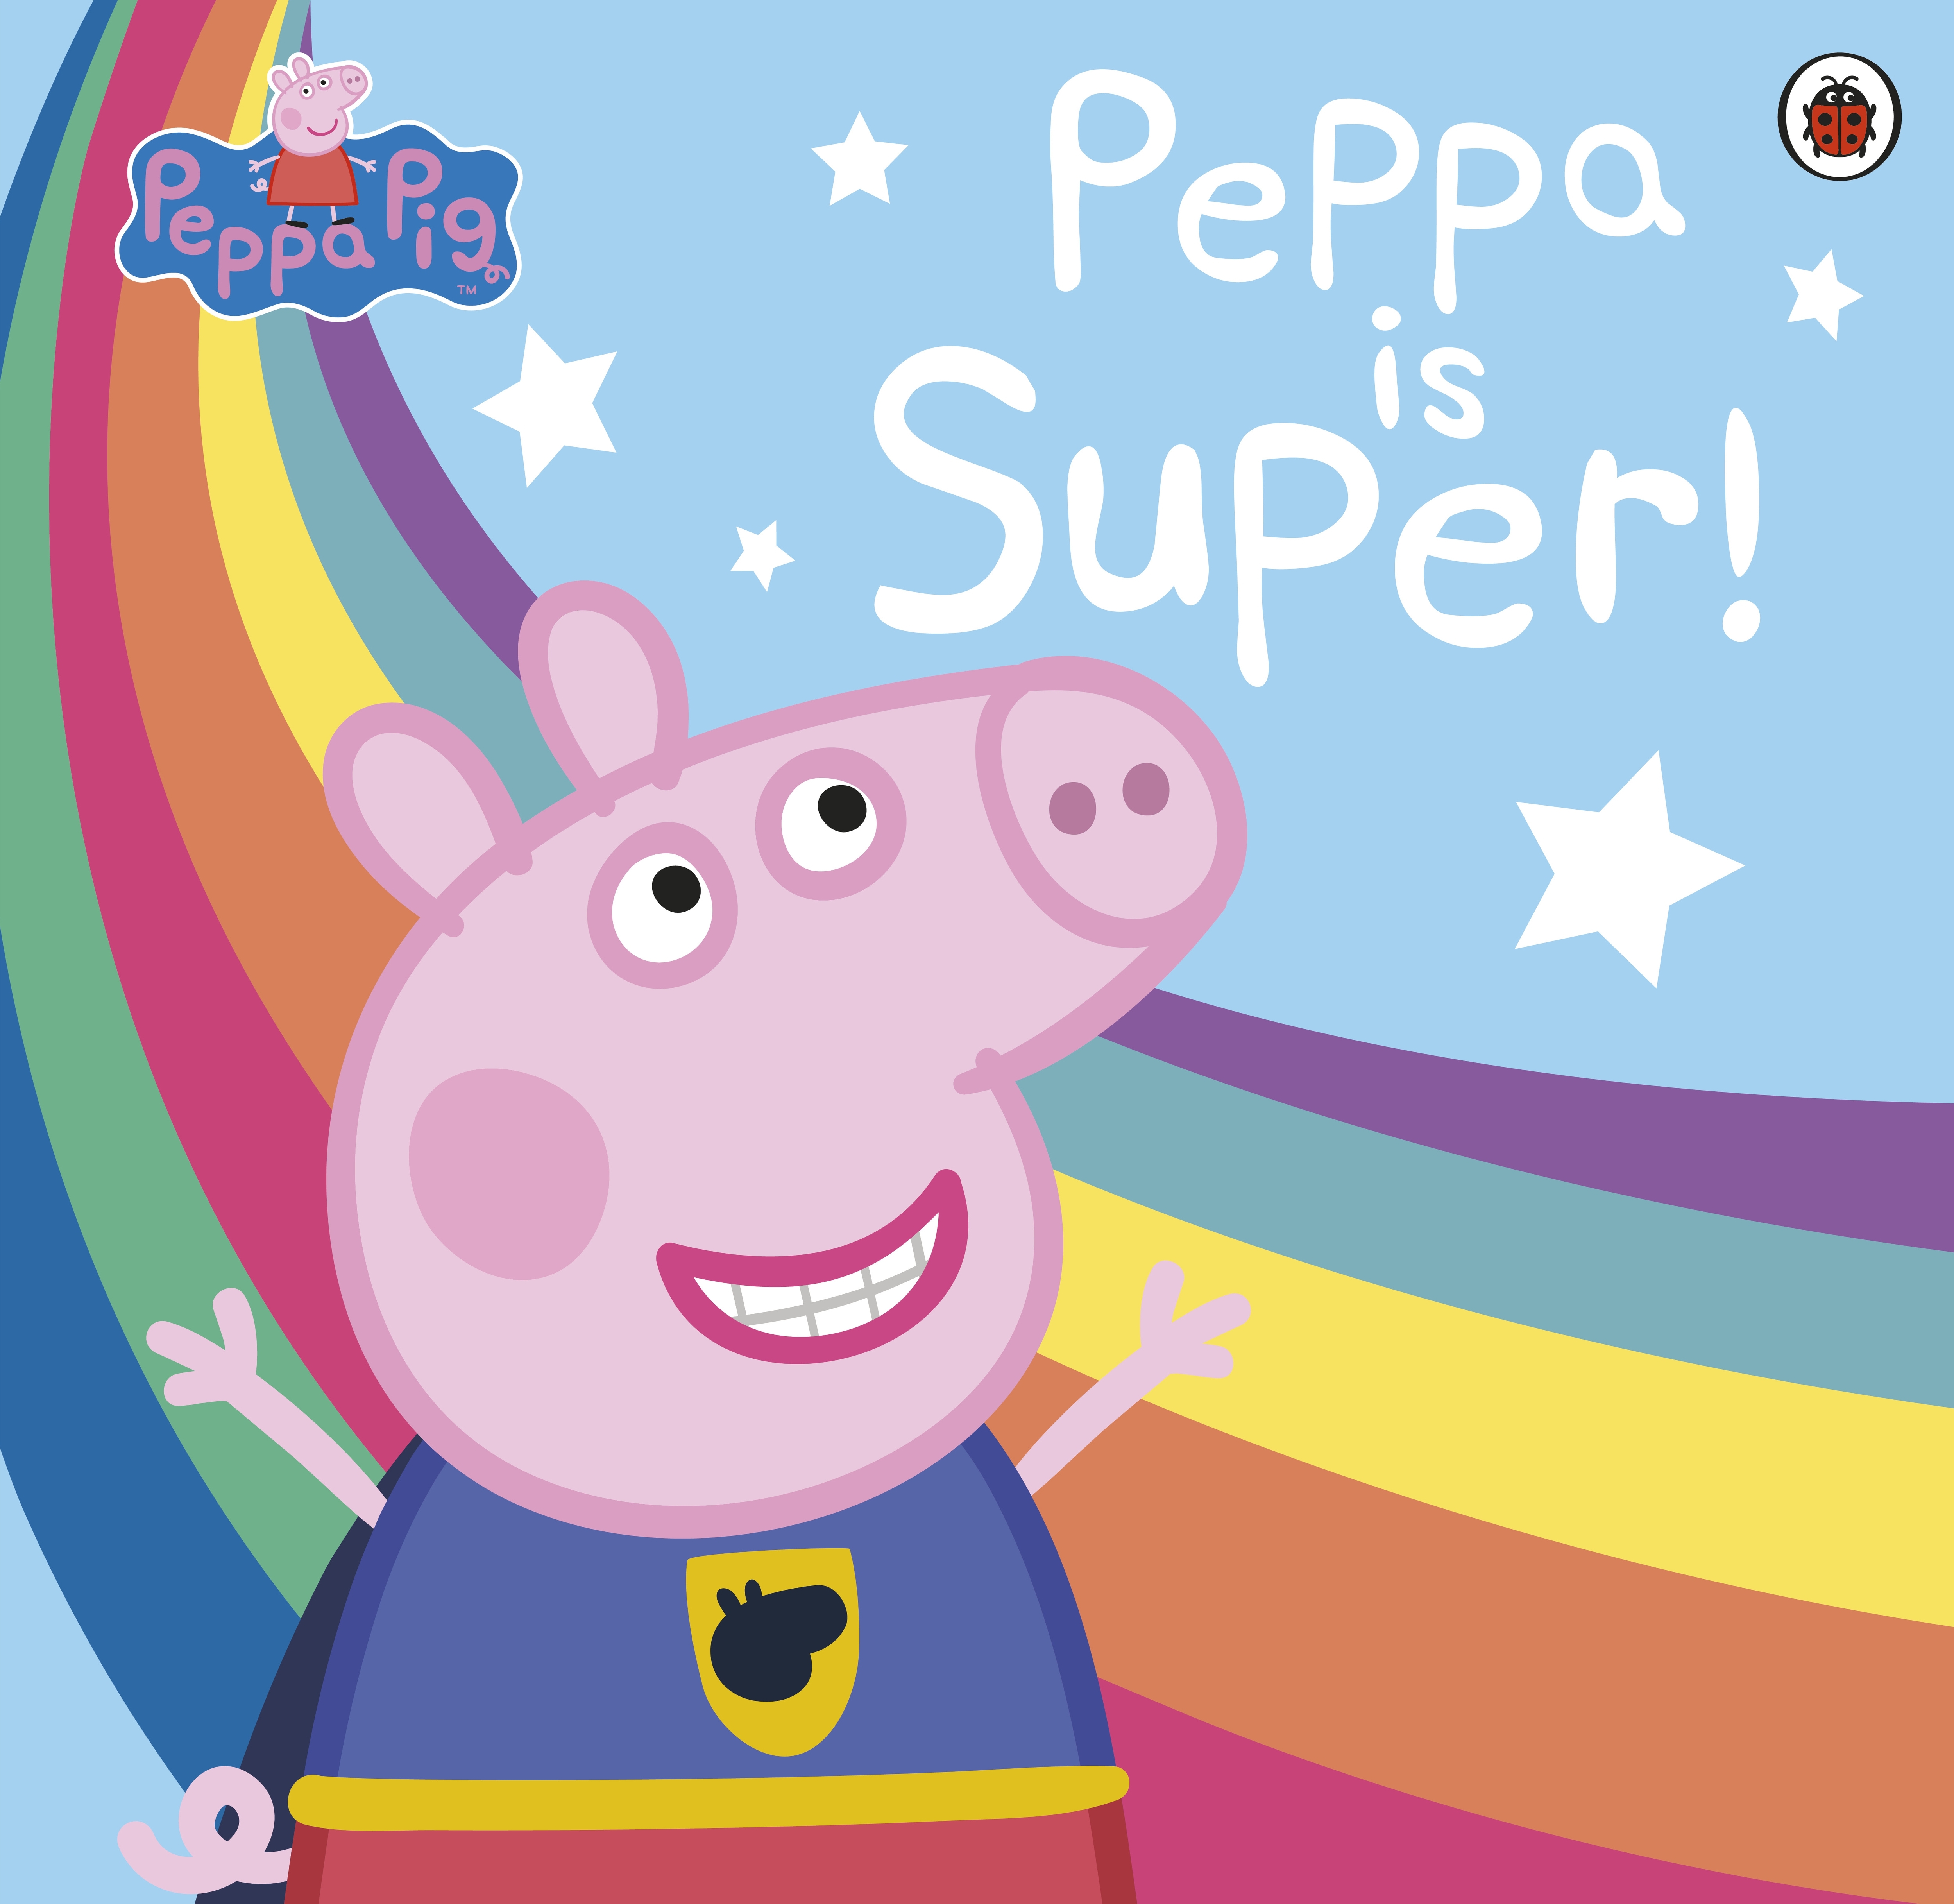 Peppa Pig: Super Peppa! by Peppa Pig - Penguin Books New ...